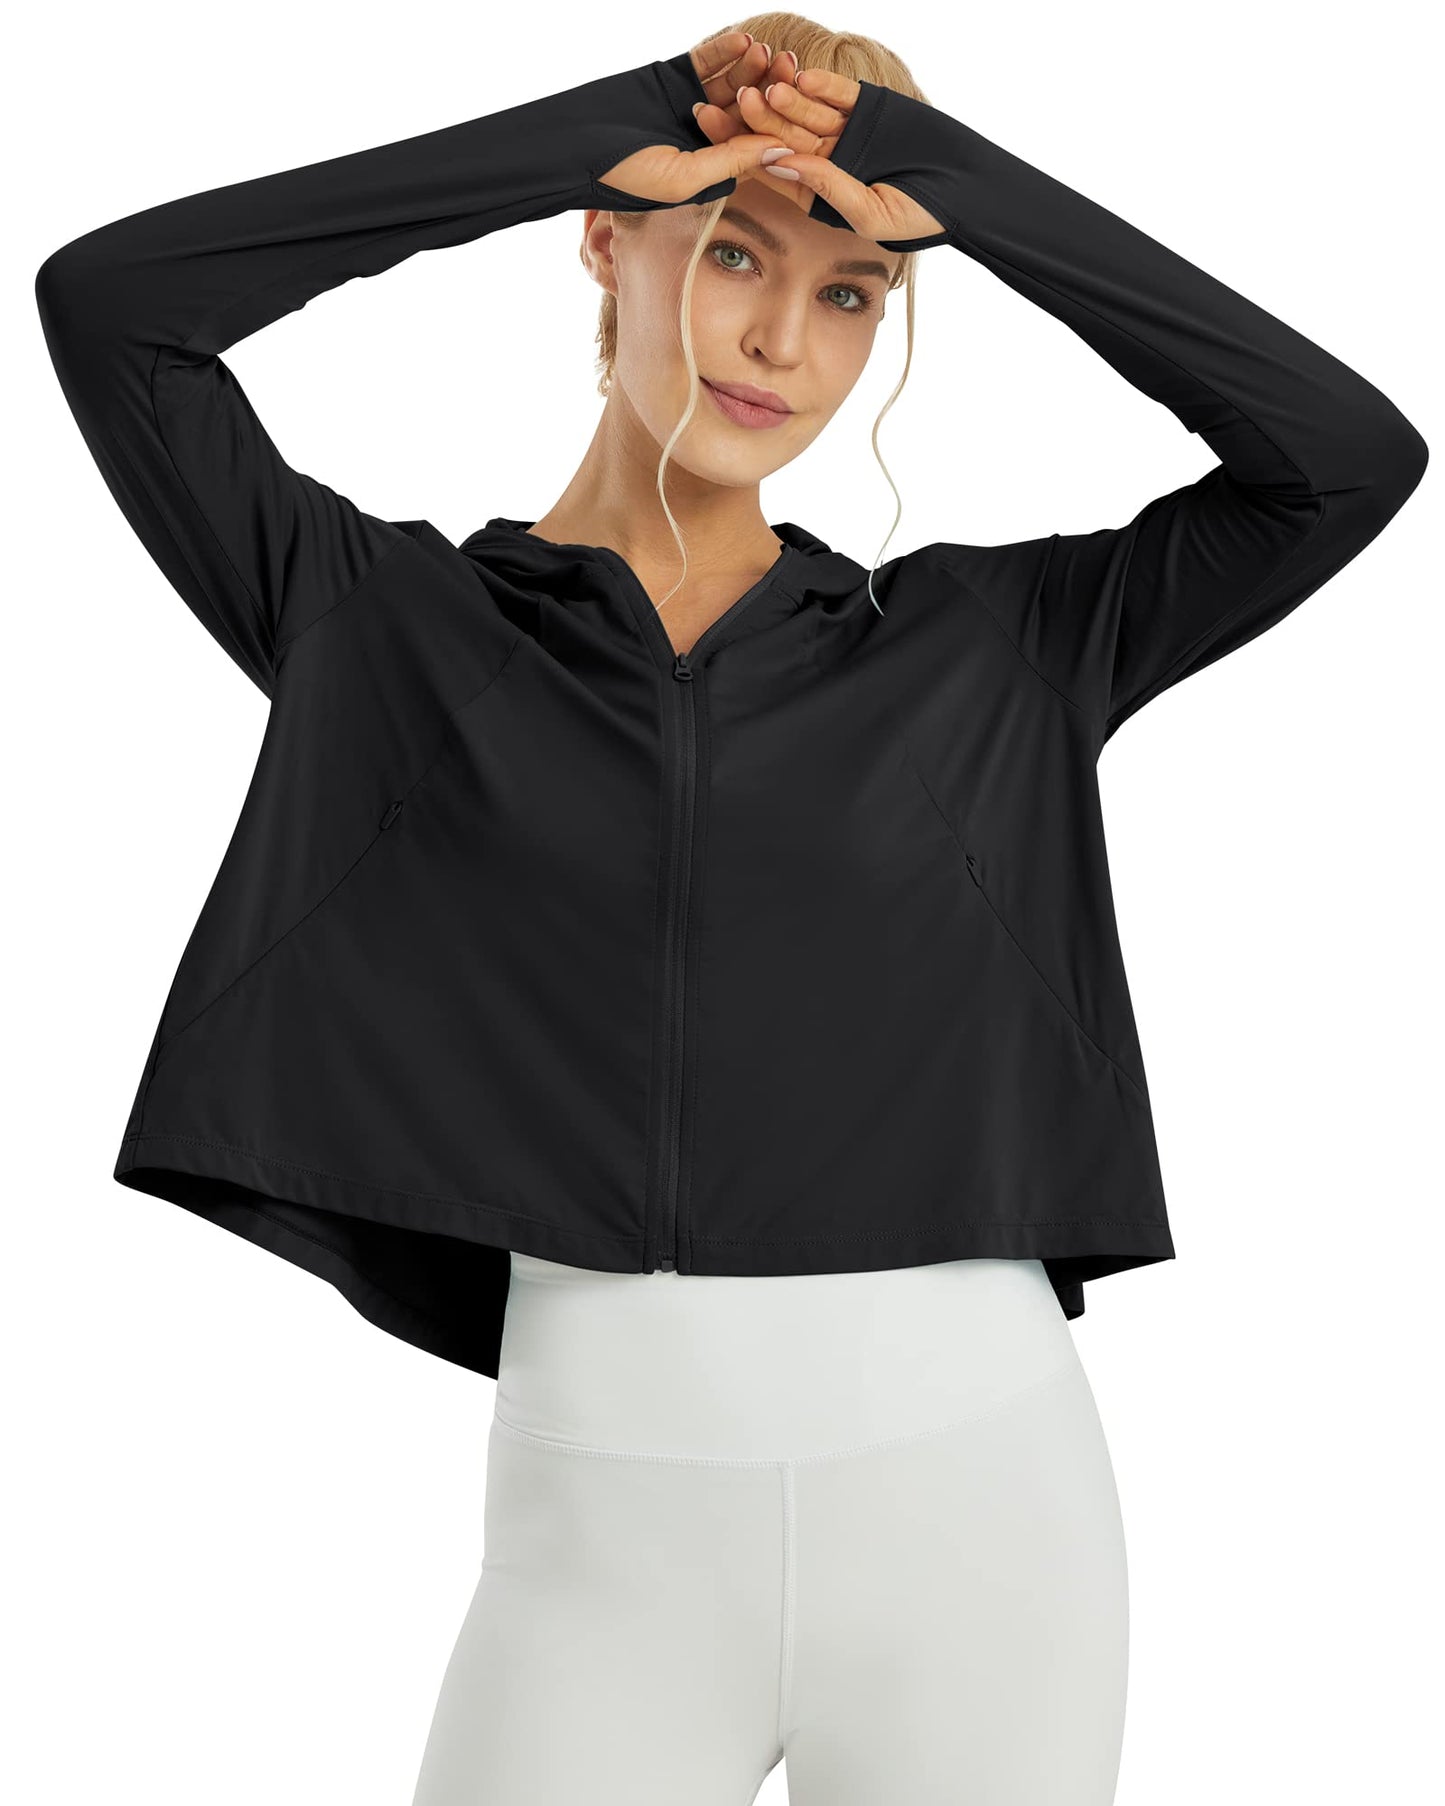 G4Free Women's UV Protection Jacket SPF Long Sleeve UPF 50+ Hiking Cropped Sun Shirt